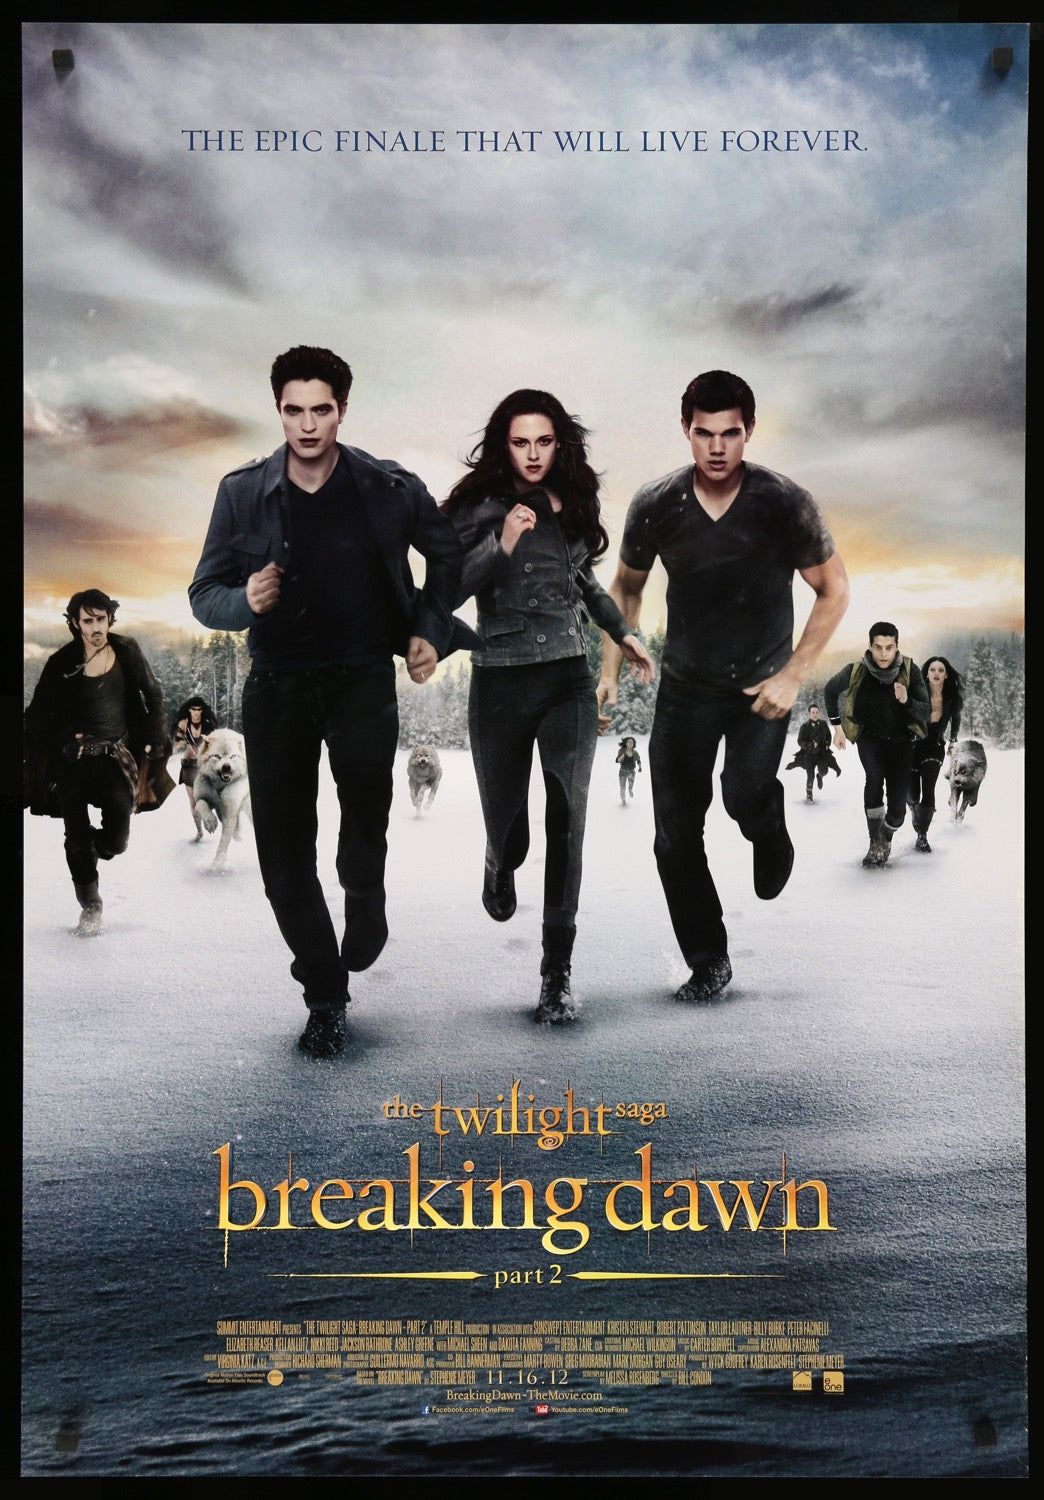 Twilight Saga - Breaking Dawn - Part 2 (2012) original movie poster for sale at Original Film Art